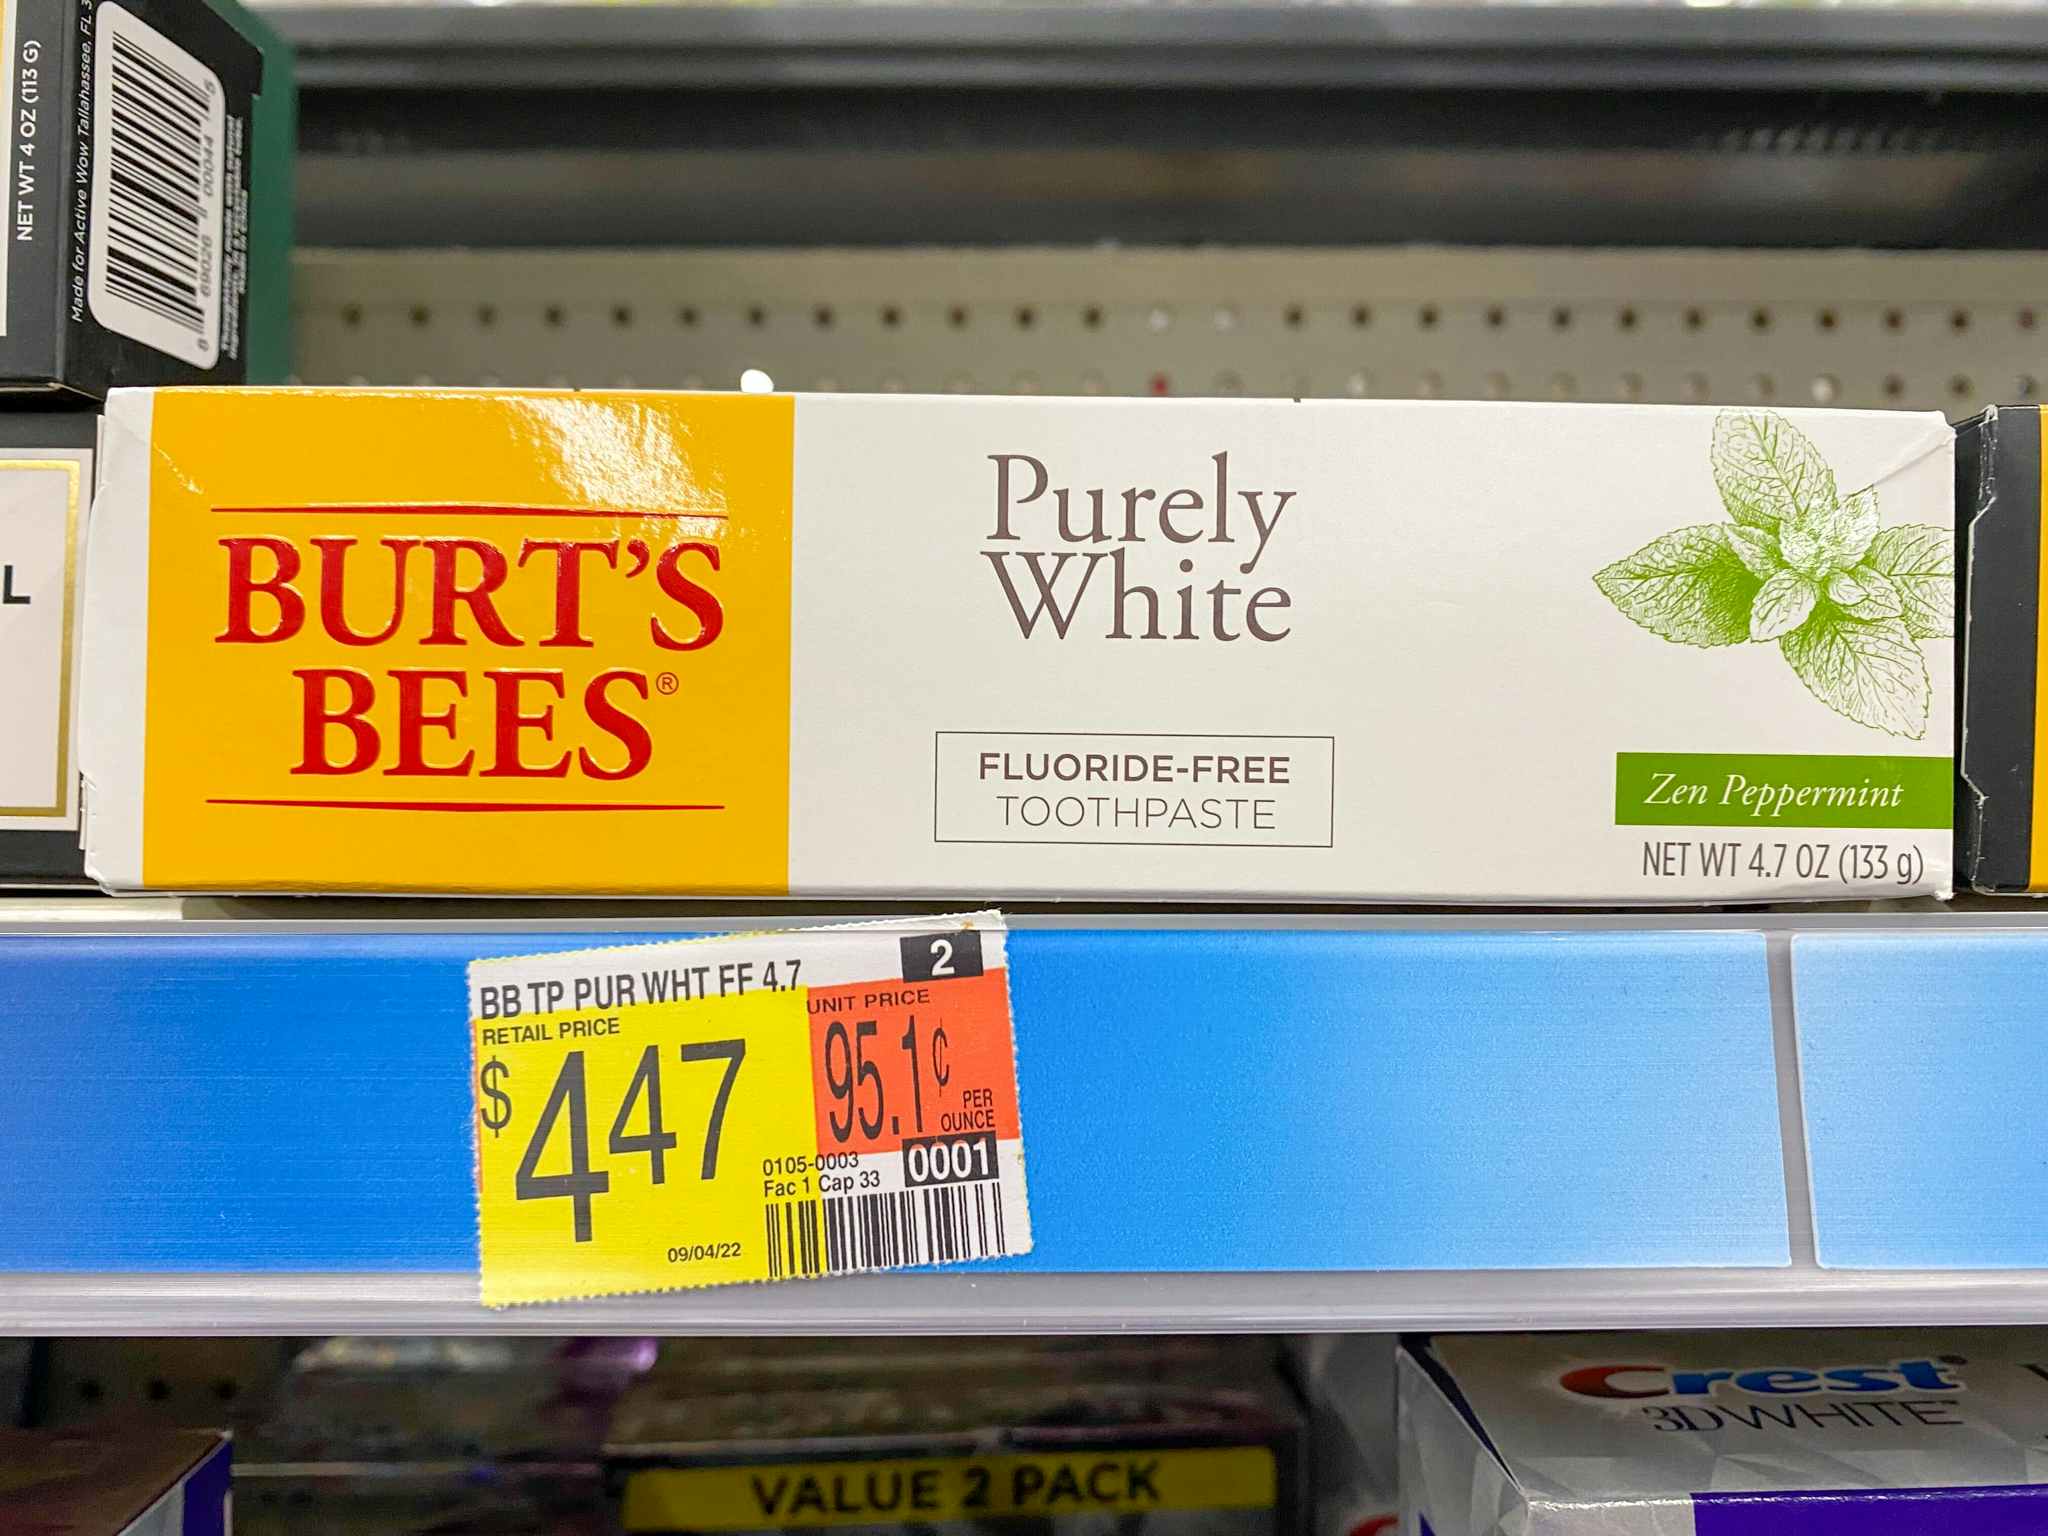 burt's bees purely white toothpaste on walmart shelf